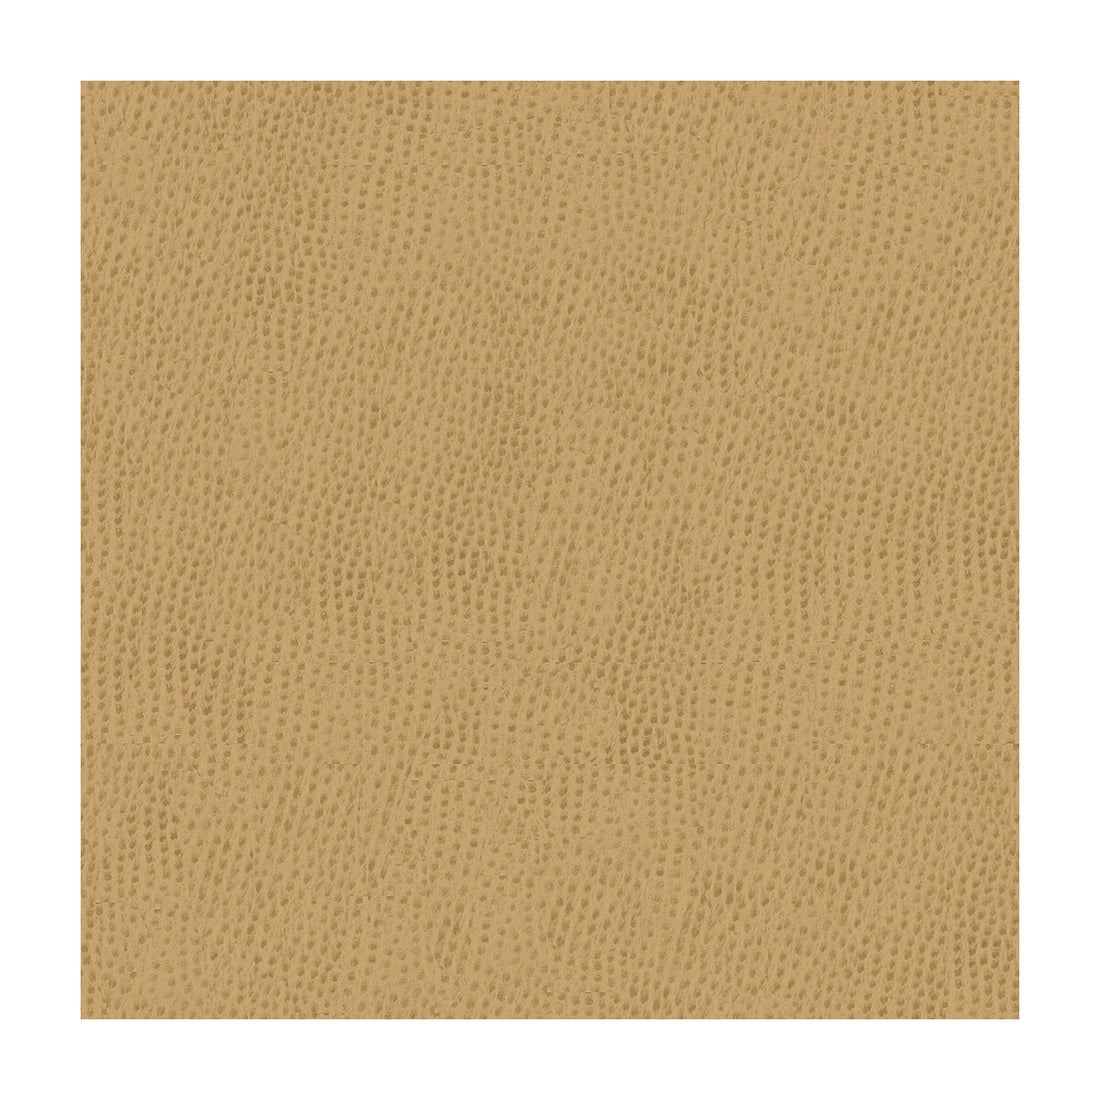 Kravet Contract fabric in belus-1616 color - pattern BELUS.1616.0 - by Kravet Contract